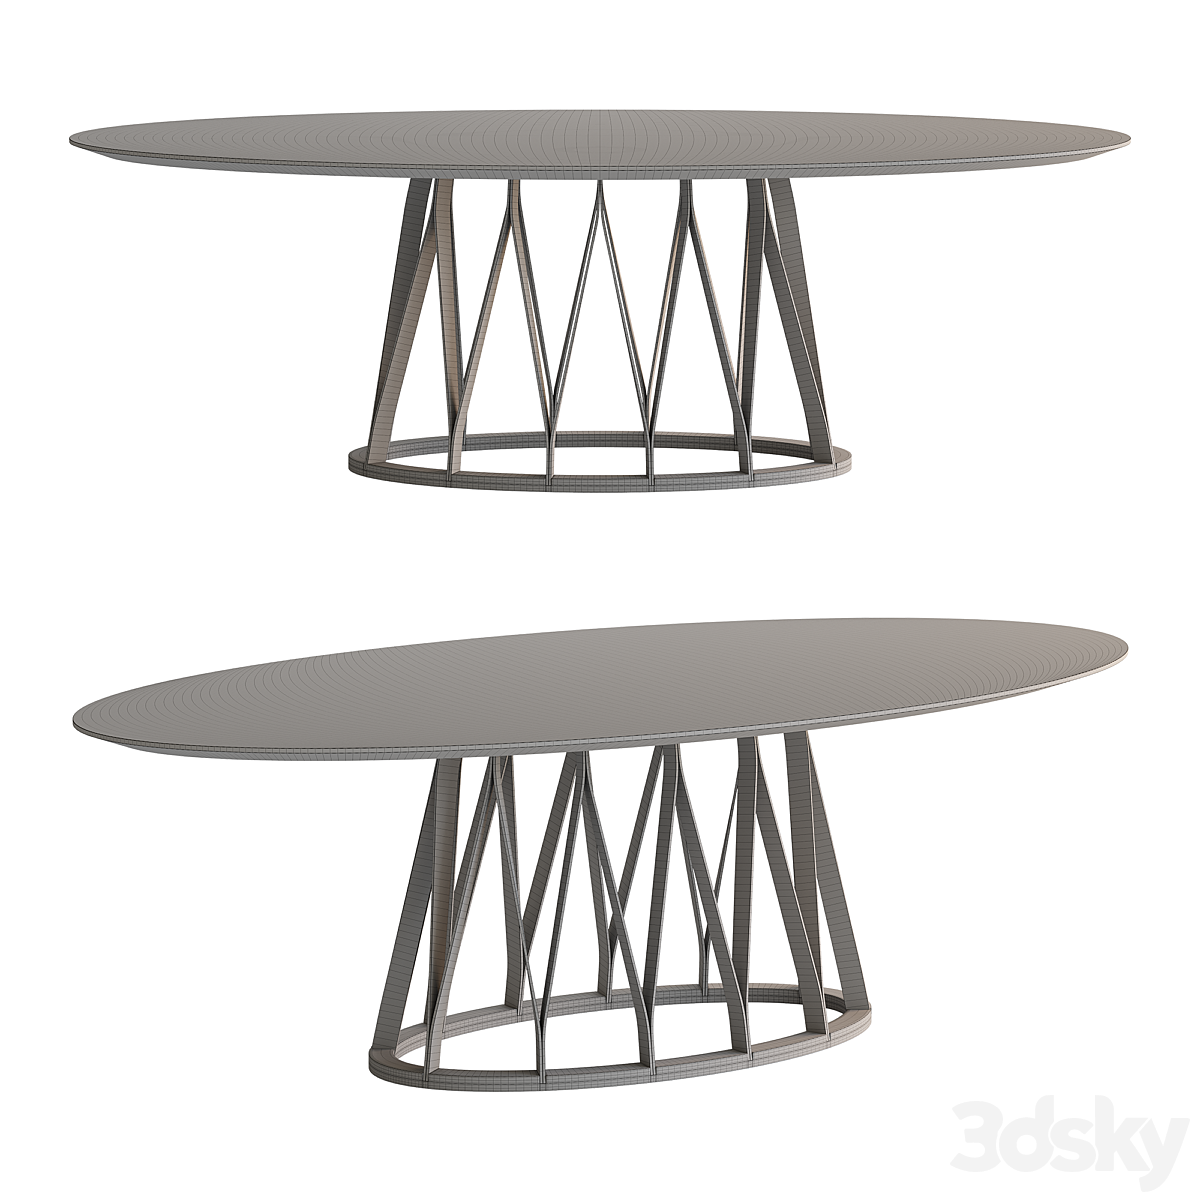 miniforms furniture interior design  3ds max corona modern trend table furniture design  wood